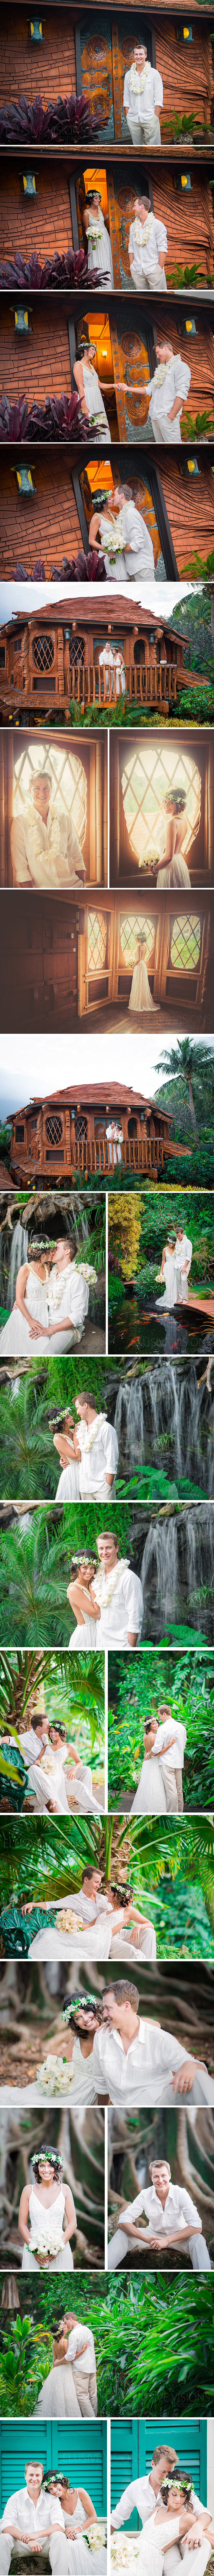 Elusive Visions Hawaii Wedding Photographer1